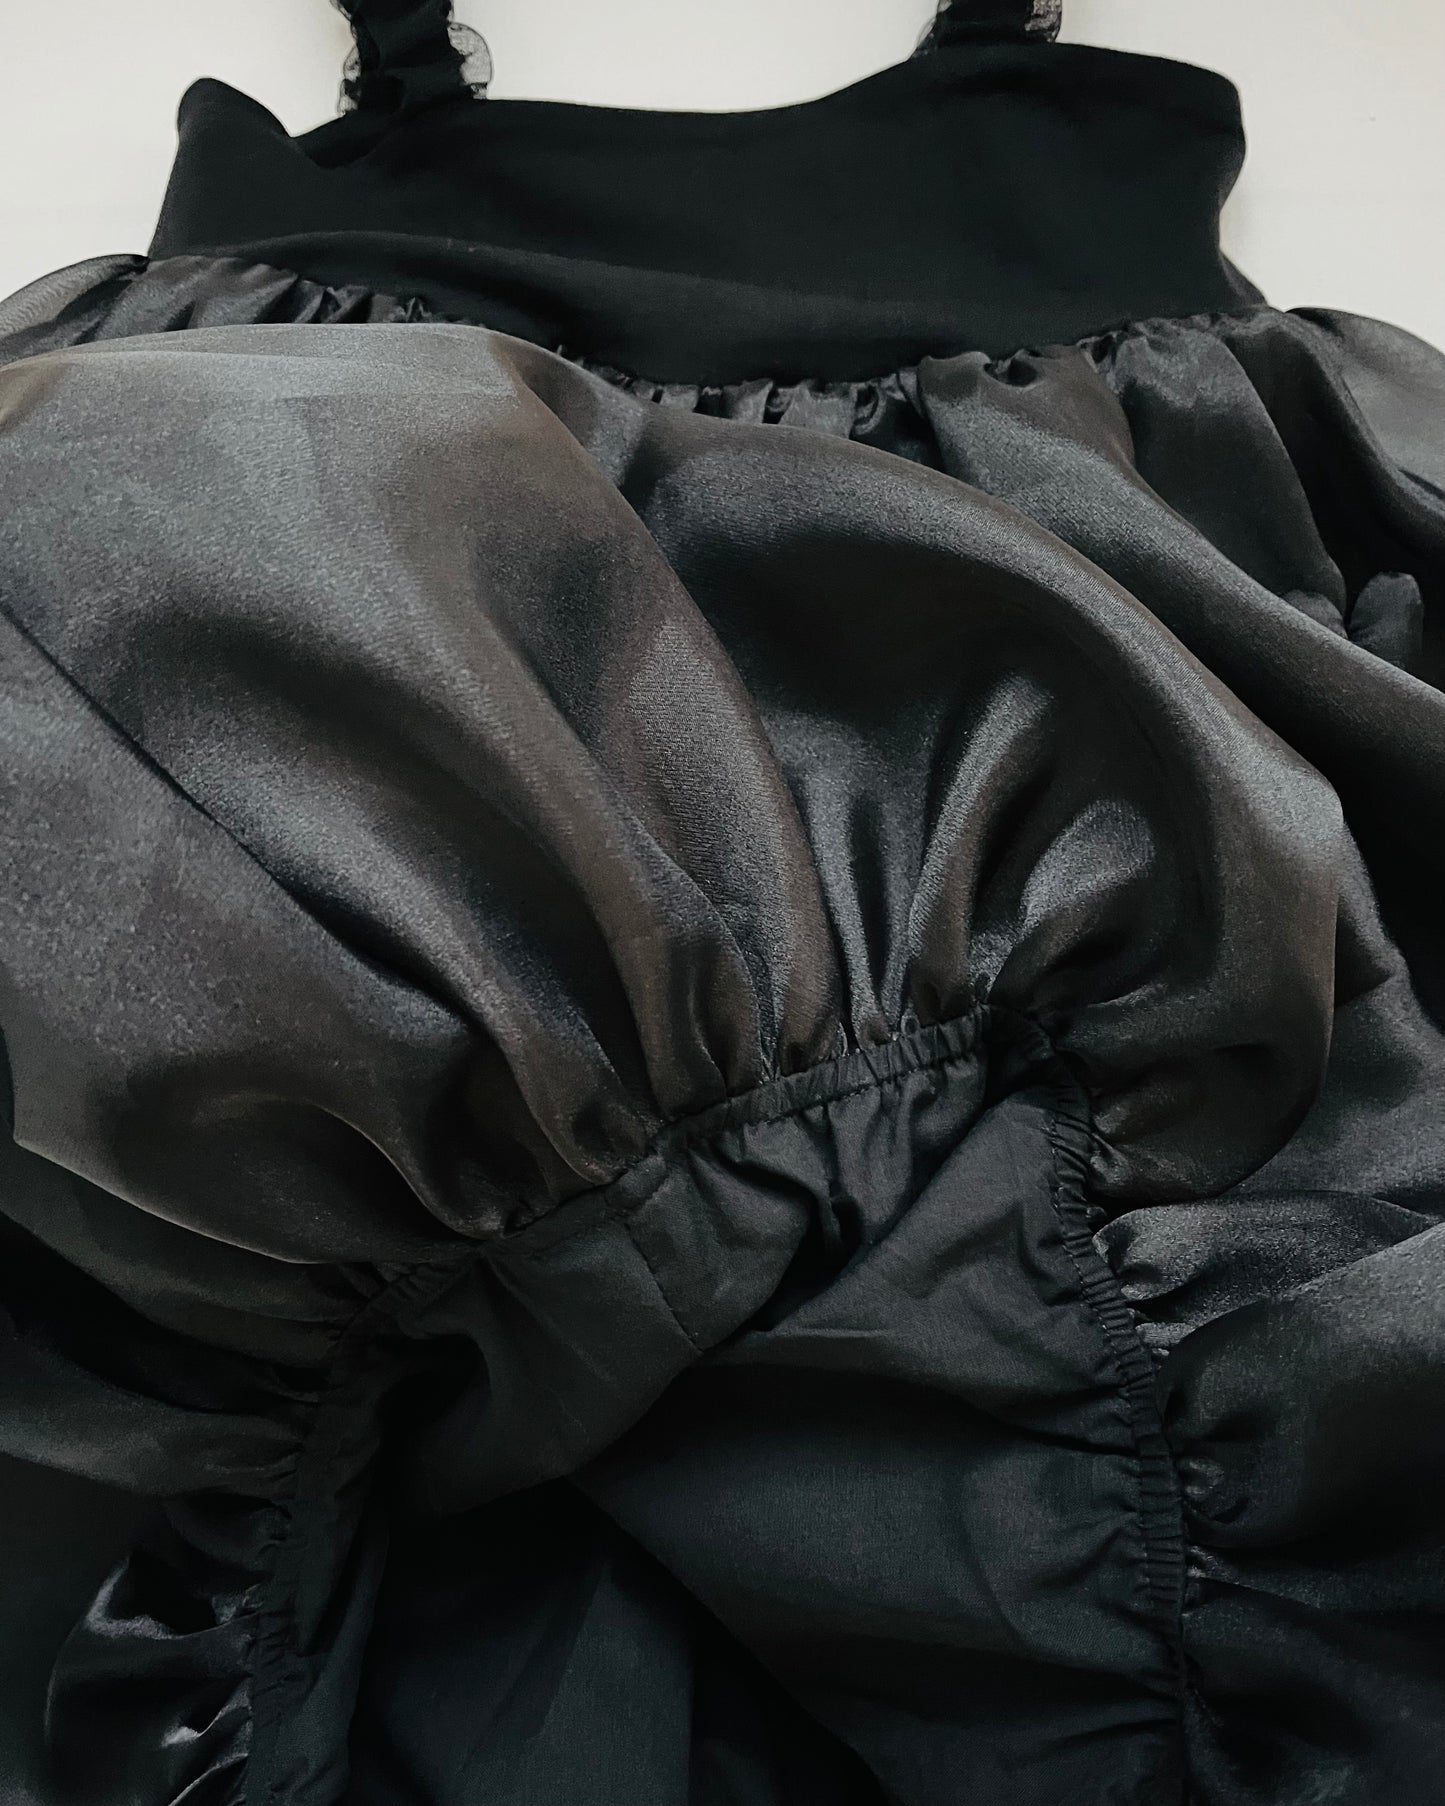 DOLLY WORLD HEART BALLOON ORGANZA DRESS WITH COTTON BODY black